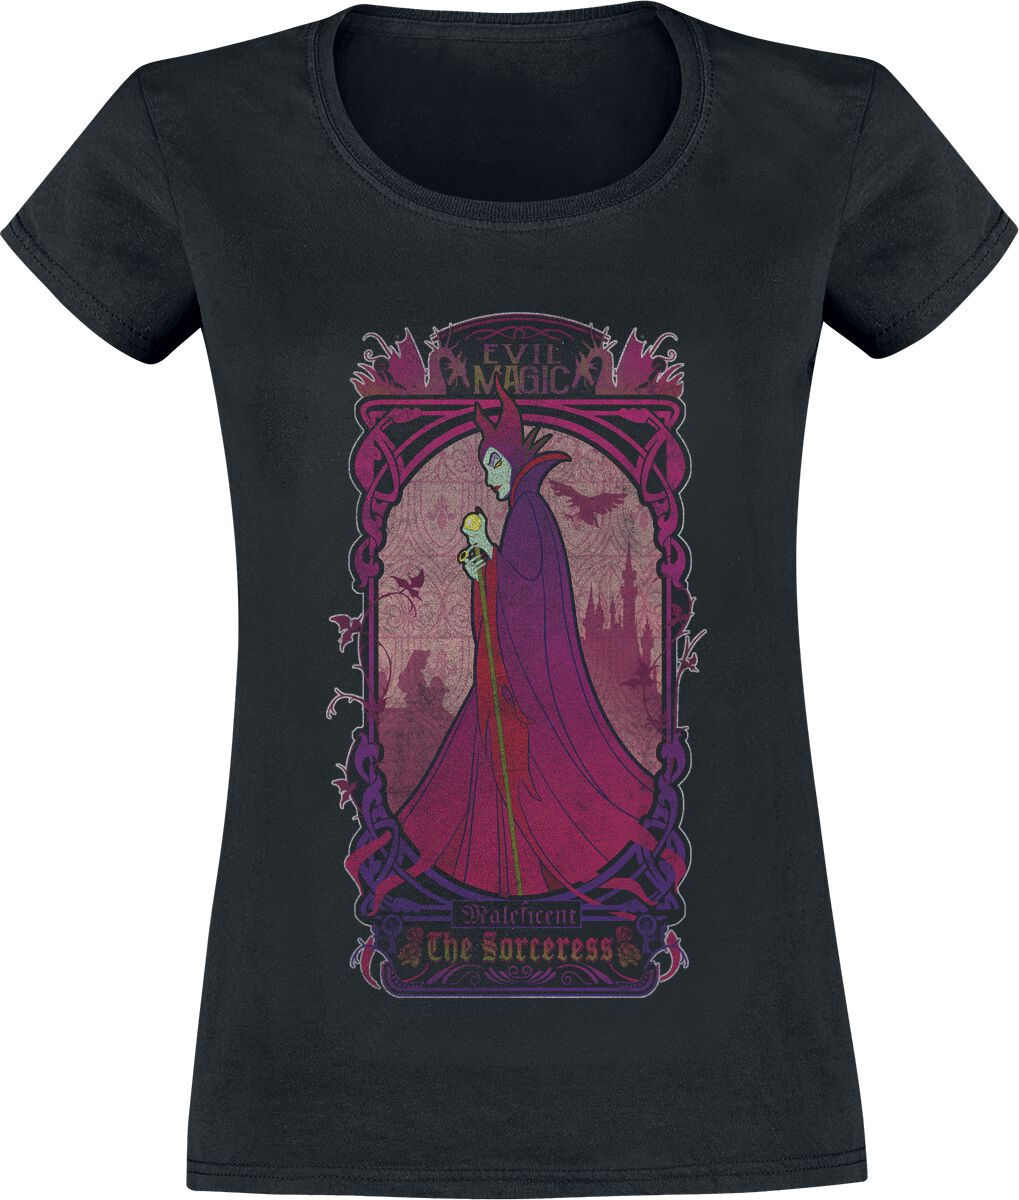 Maleficent - The Sorceress - T-Shirt - Donna - nero